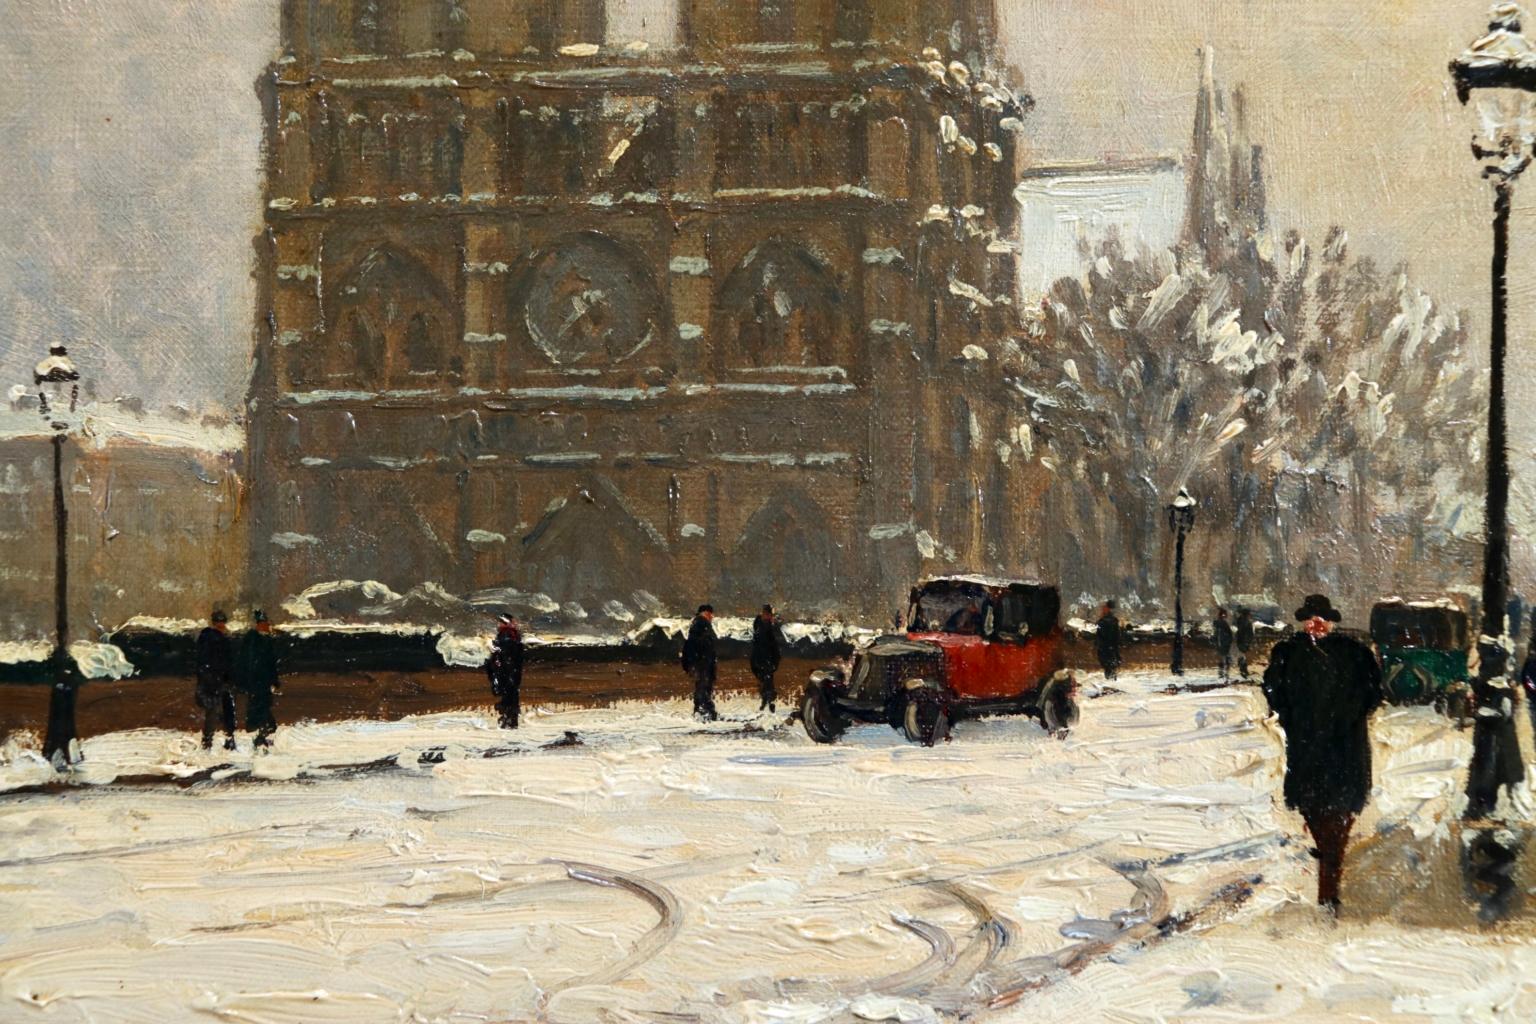 Notre Dame sur la neige - Paris - Figures in Winter Landscape by Henry Malfroy 2